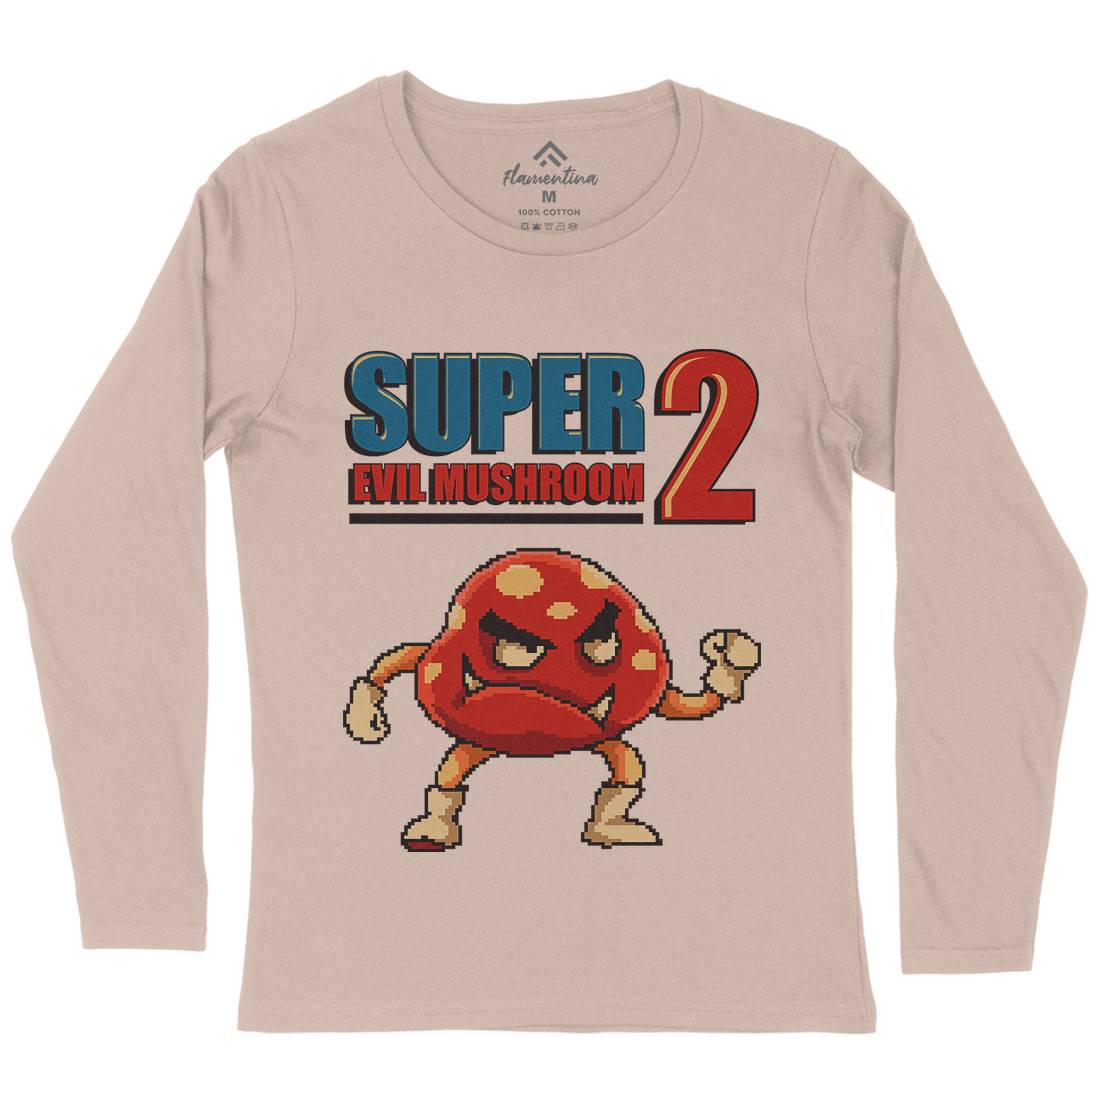 Super Evil Mushroom Womens Long Sleeve T-Shirt Geek B962